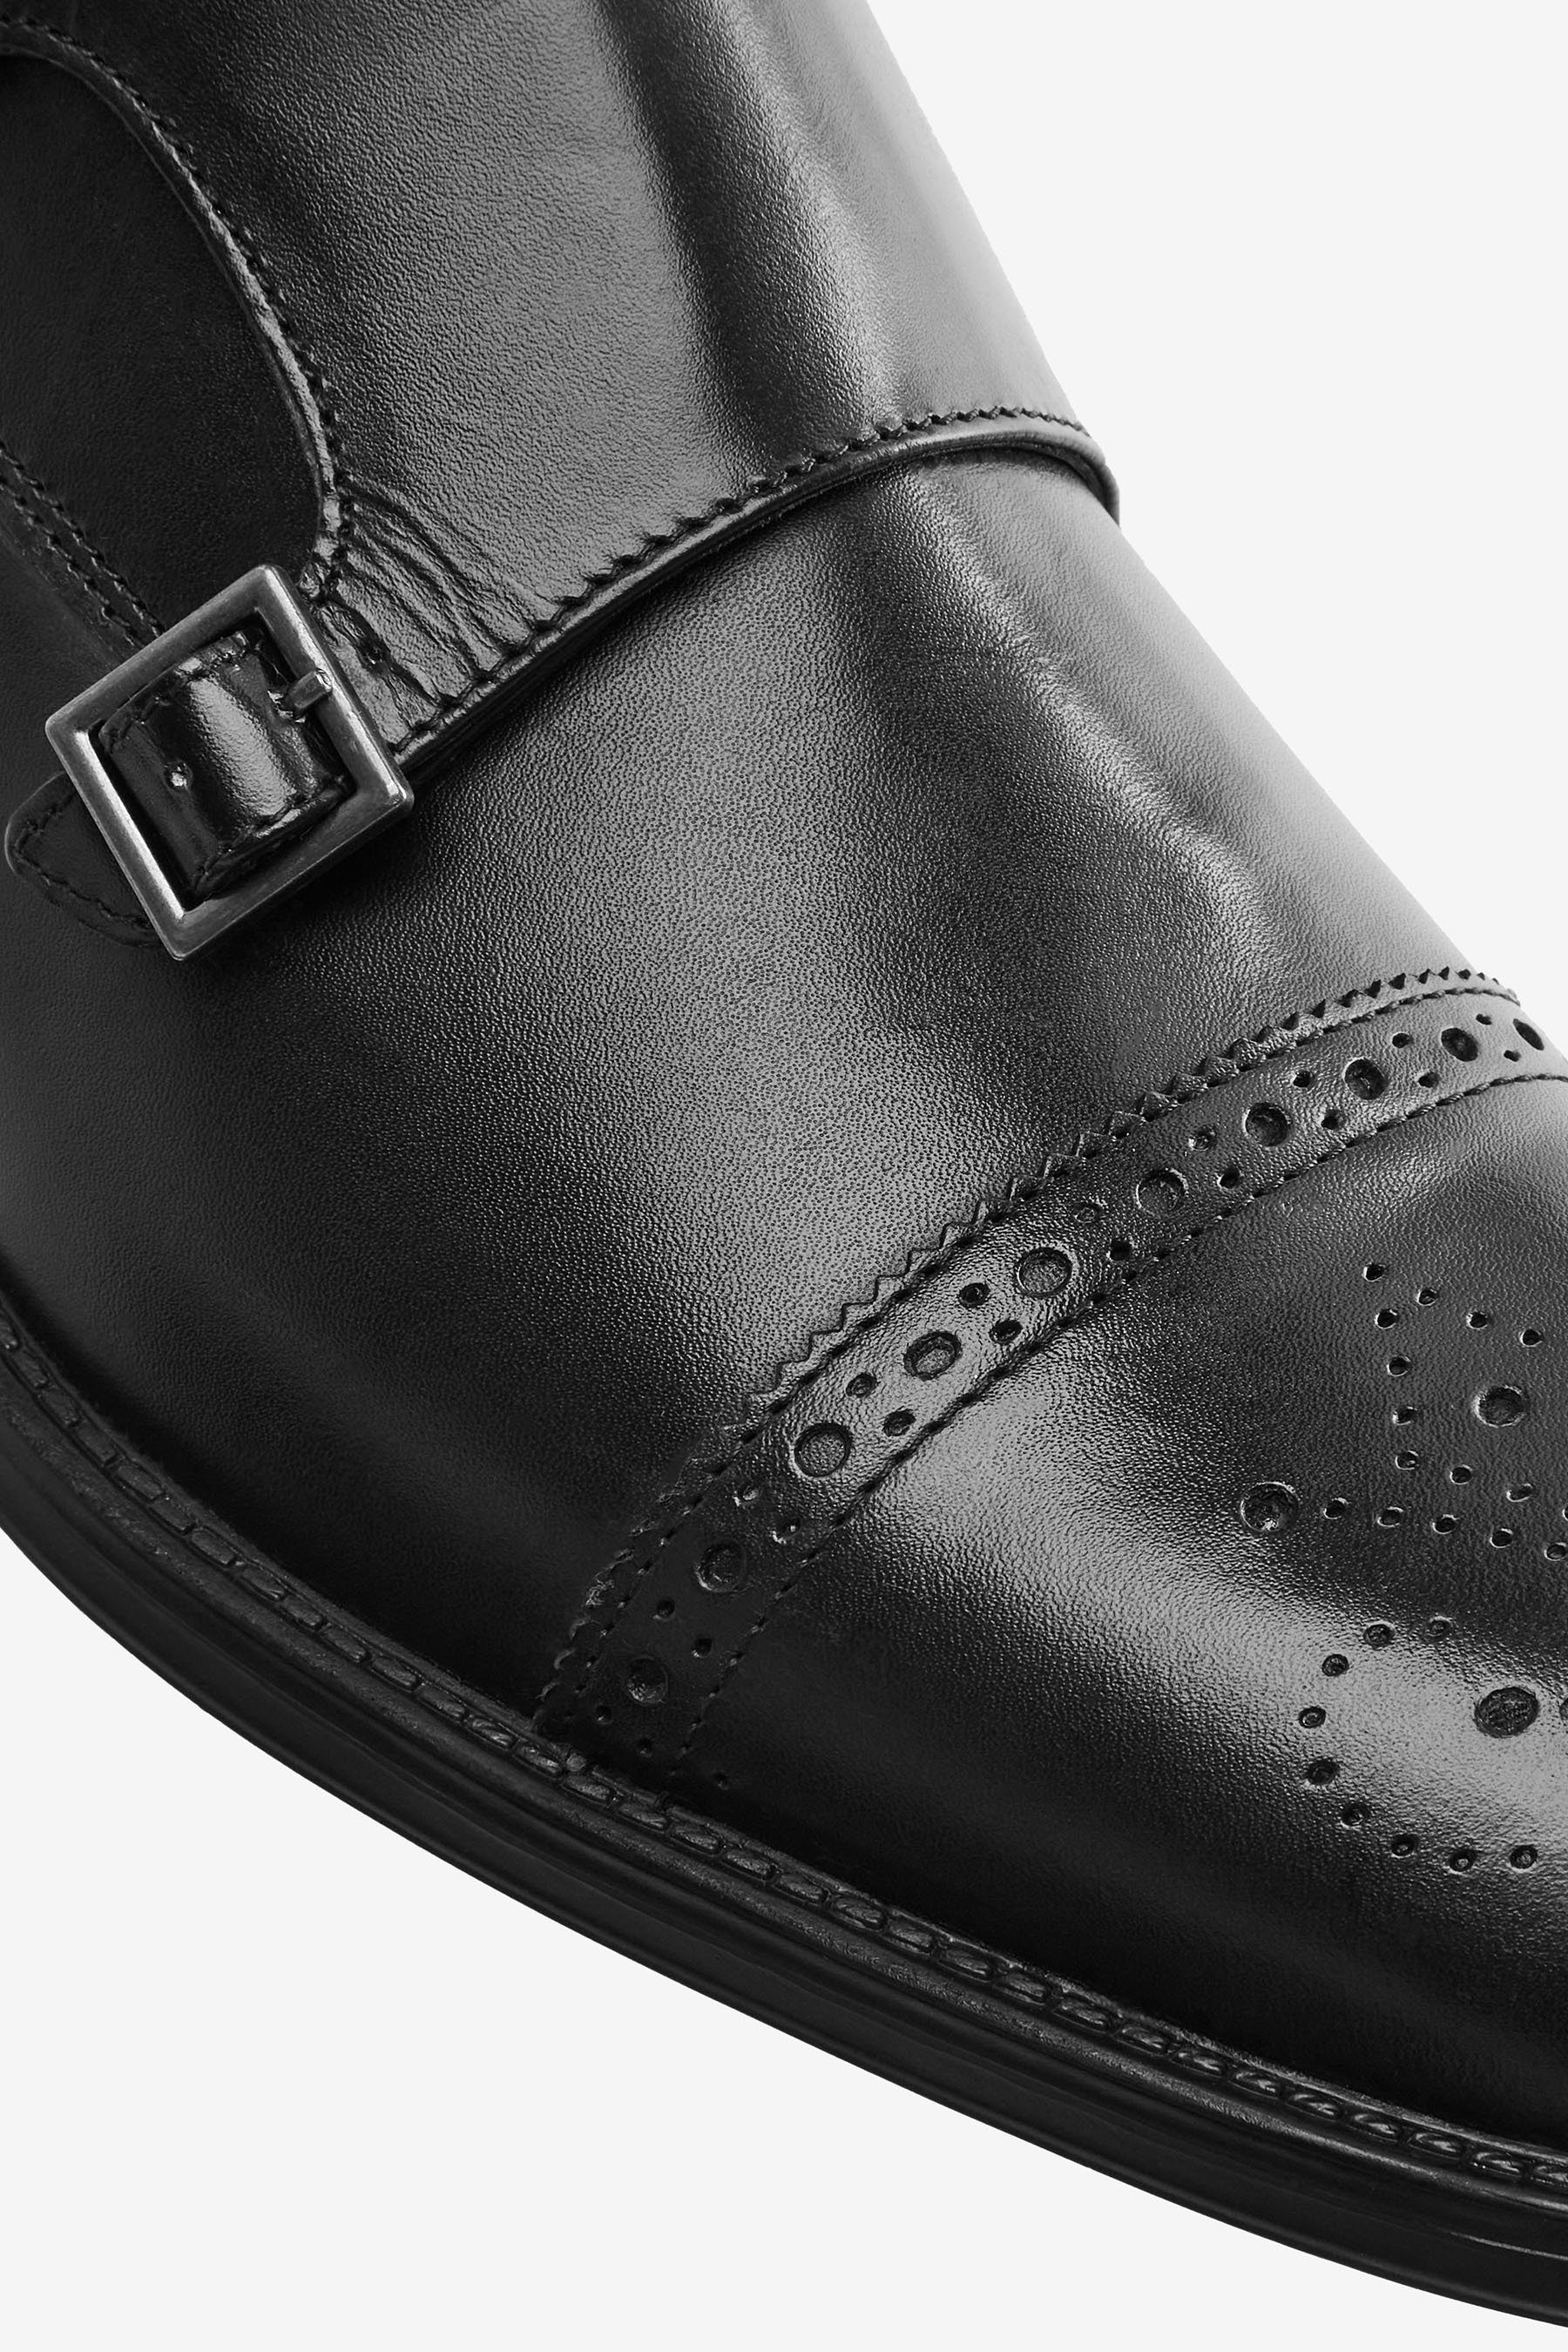 Schuhe Halbschuhe Next Monkstrap-Schuhe aus Leder mit Zehenkappe Slipper